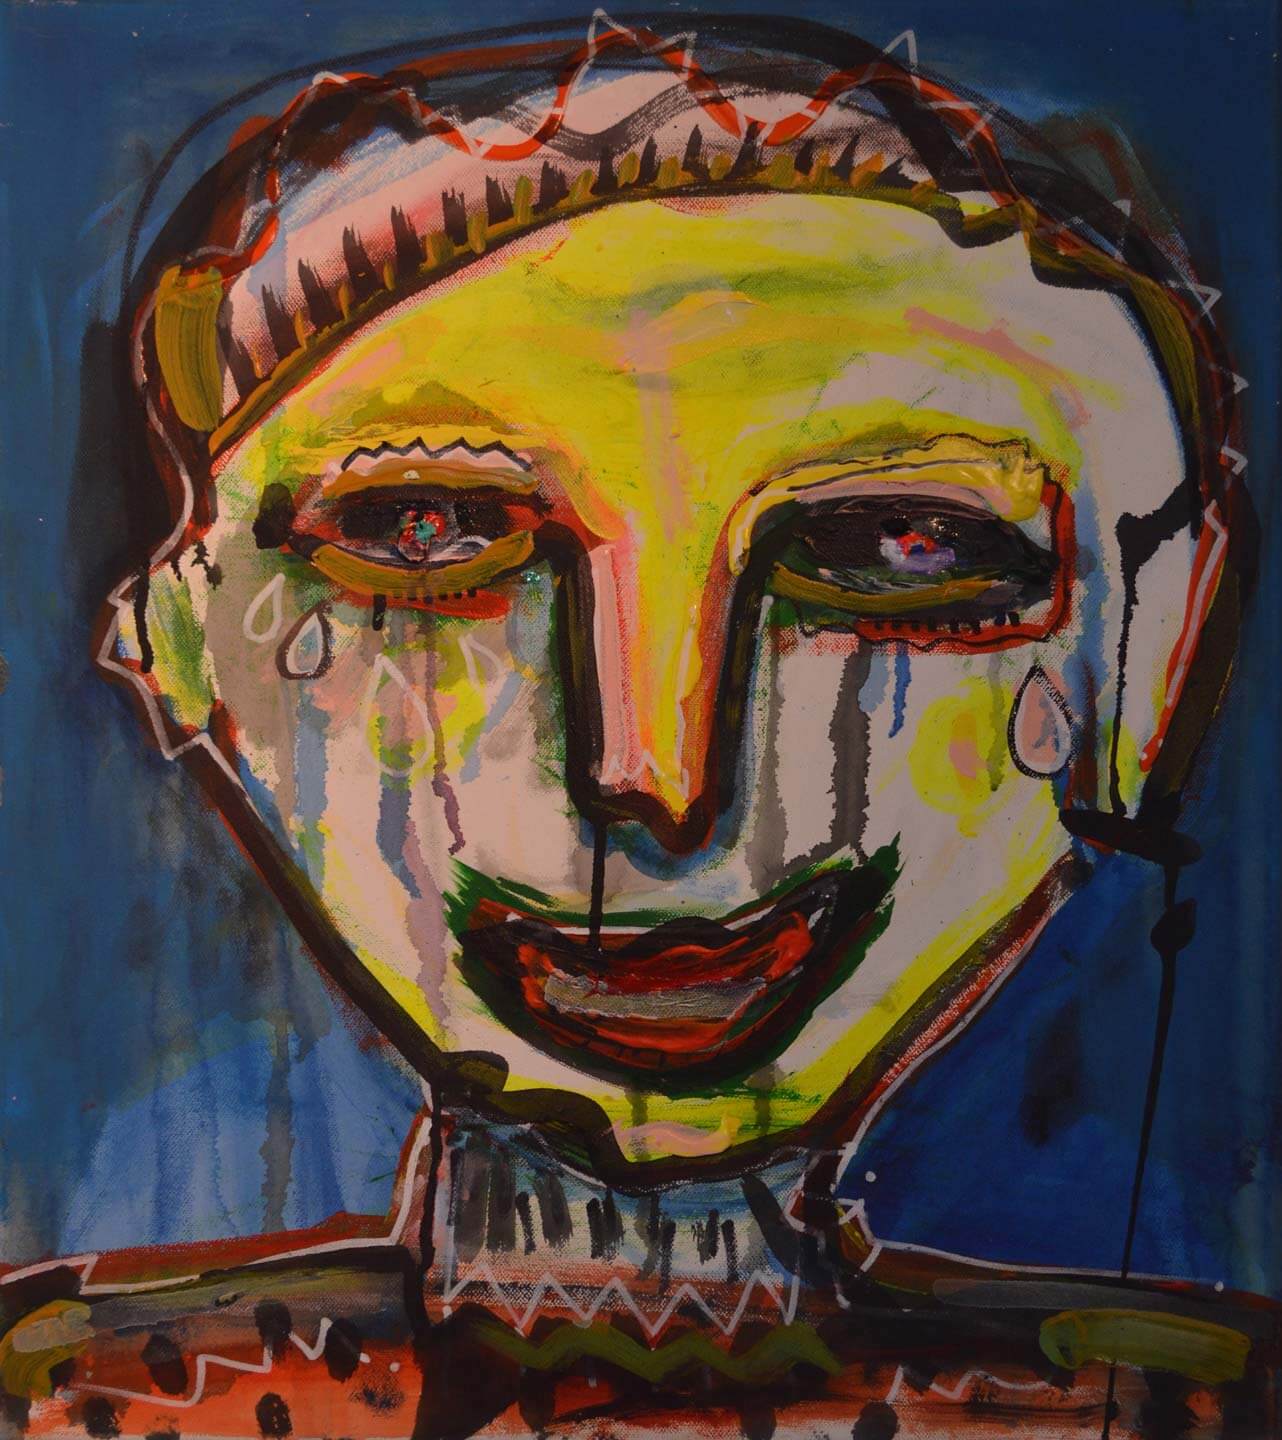 Juan Mariño, Venezuela. Clown of the street light, 2014. Acrylic on canvas, 19” x 23”